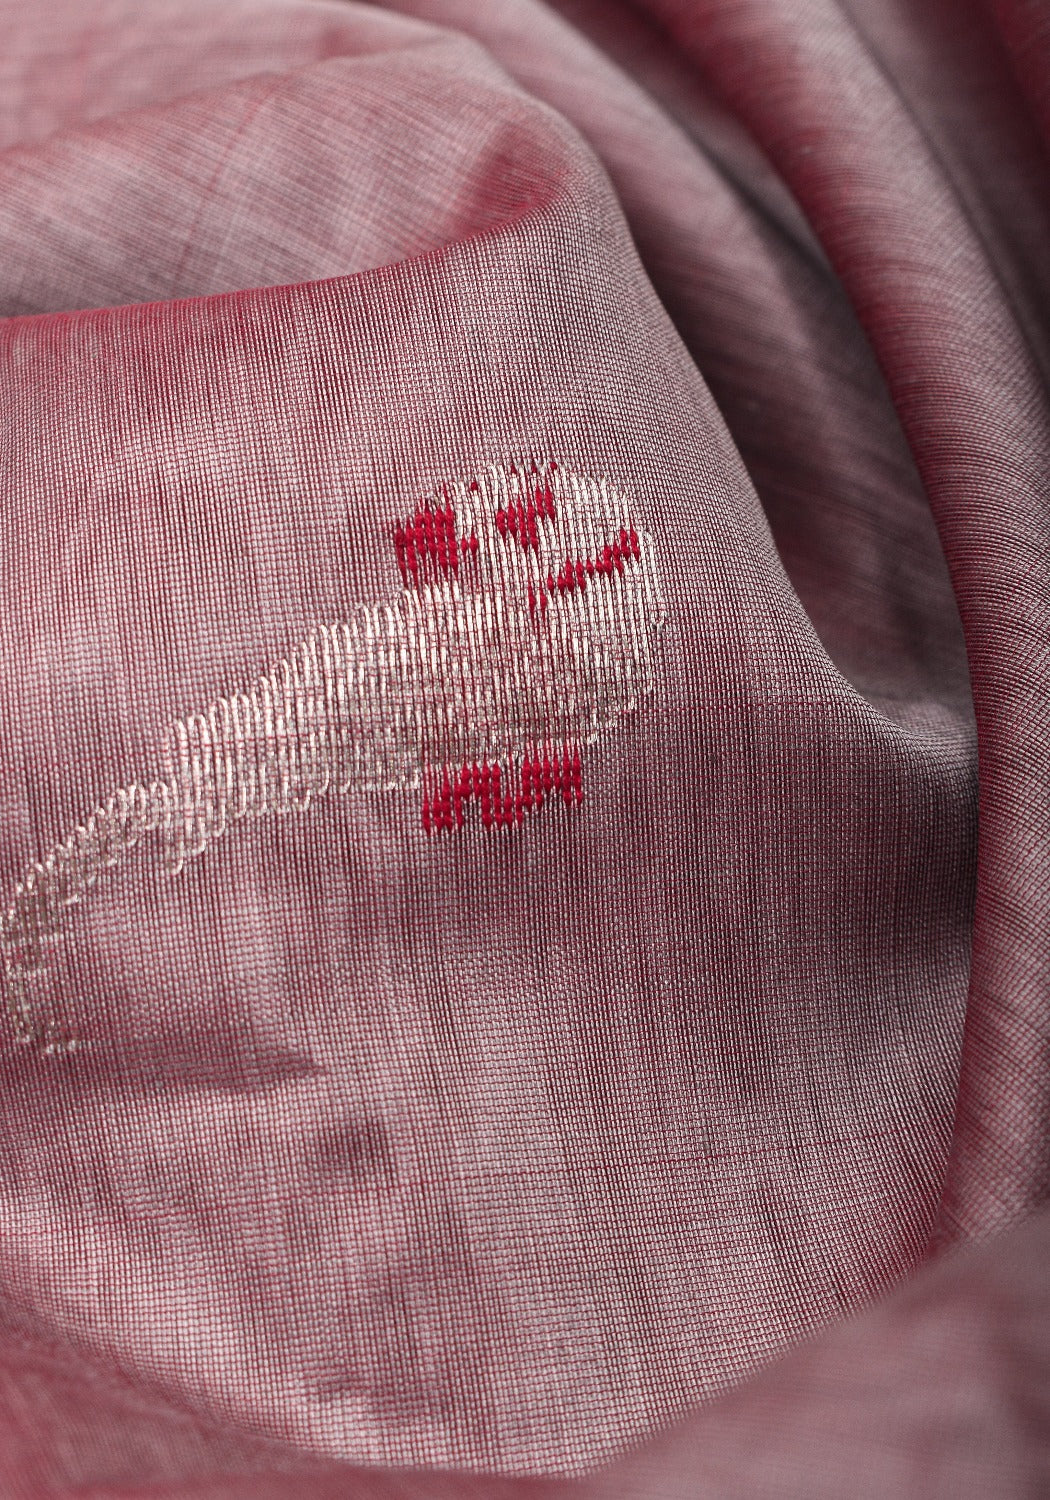 Pale Amethyst Dual tone Handwoven Maheshwari Silk Cotton Saree with Parrot Motifs